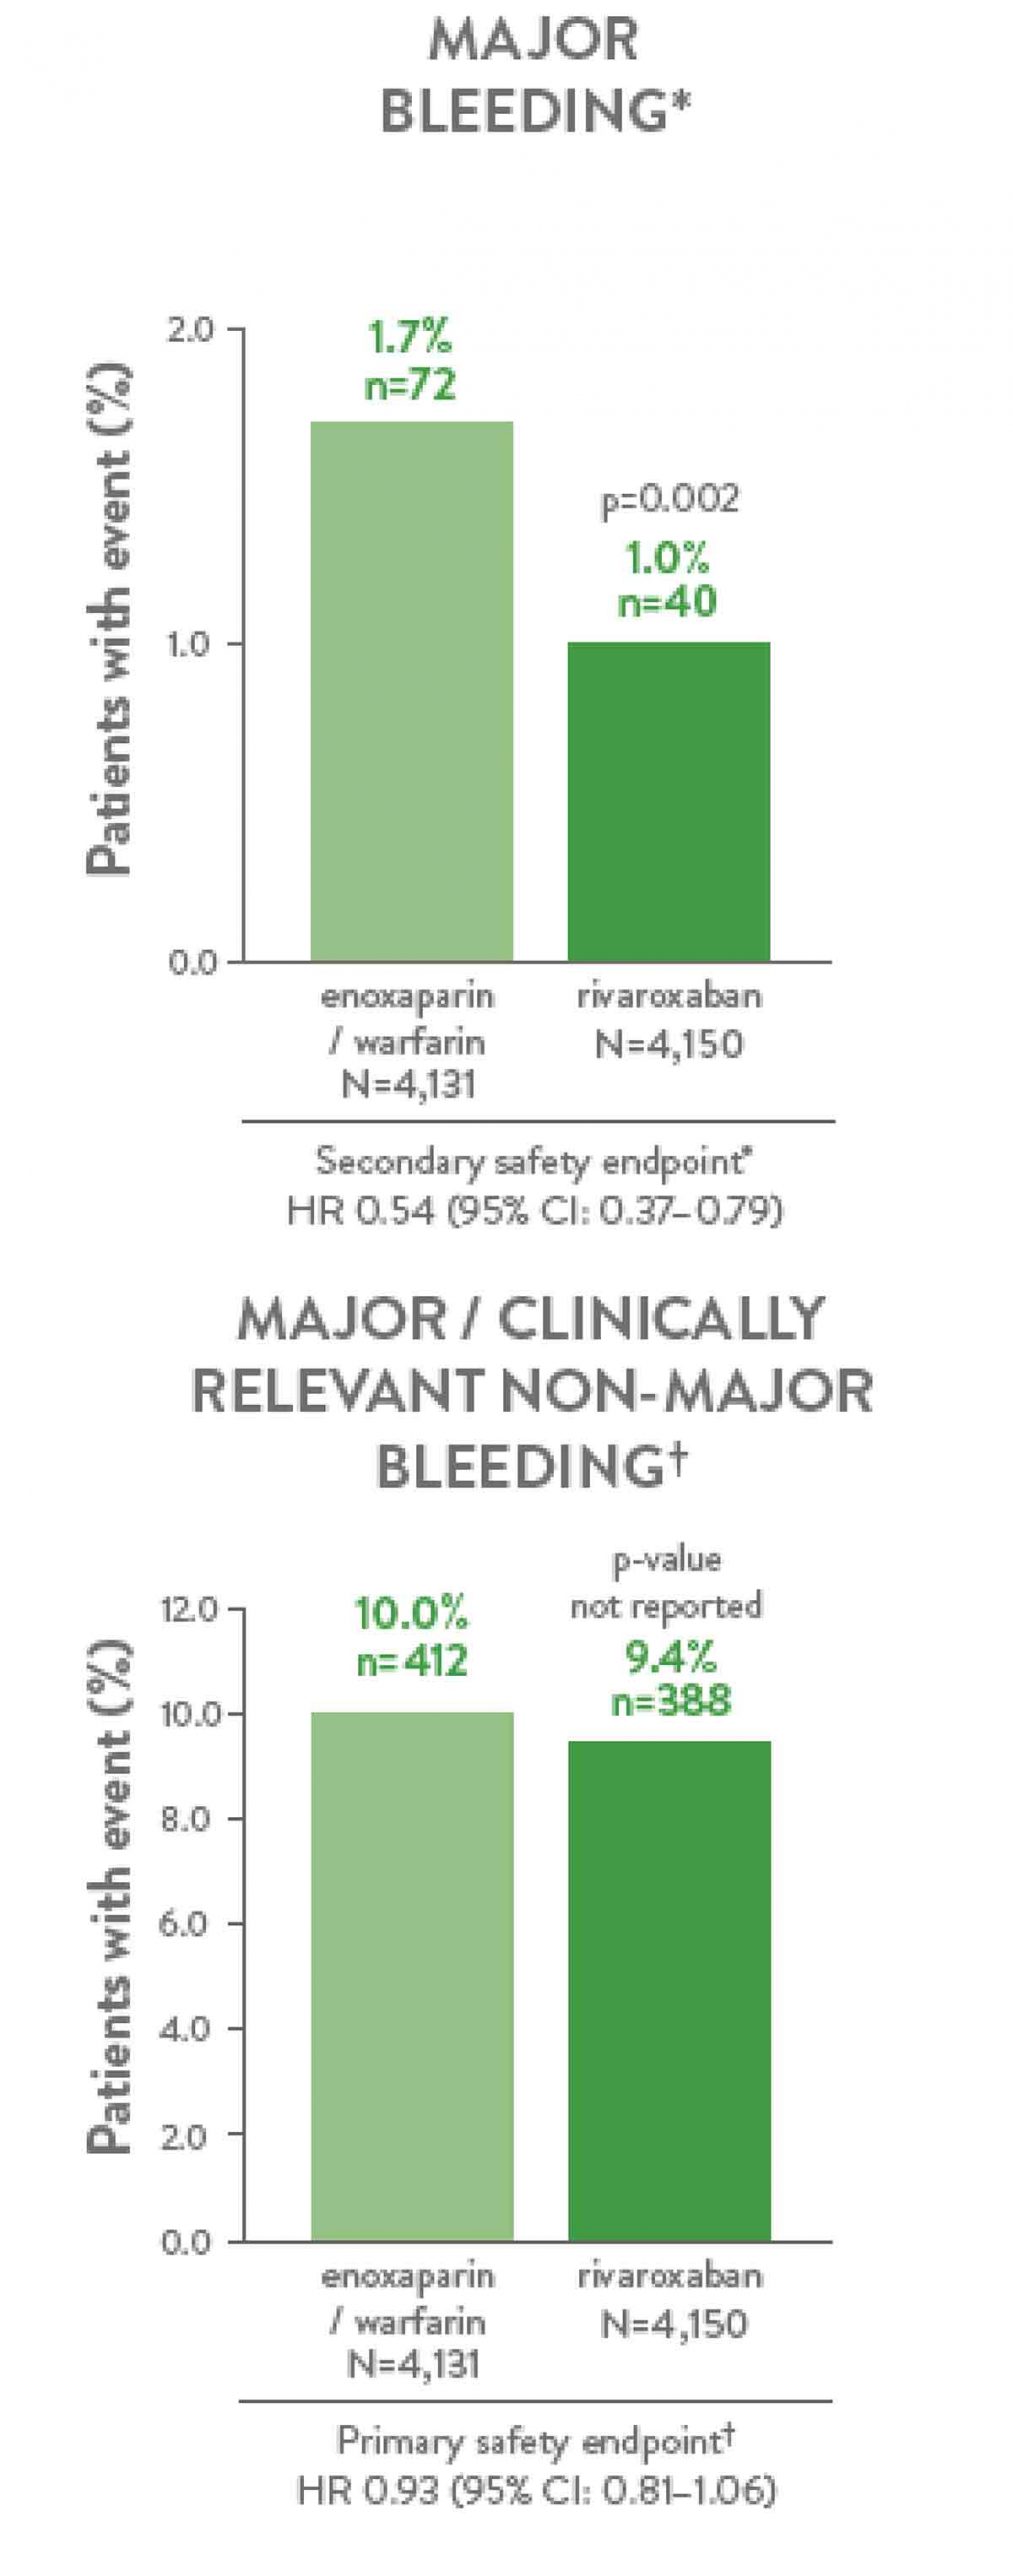 Bleeding profile of rivaroxaban vs. enoxaparin / warfarin: EINSTEIN pooled analysis